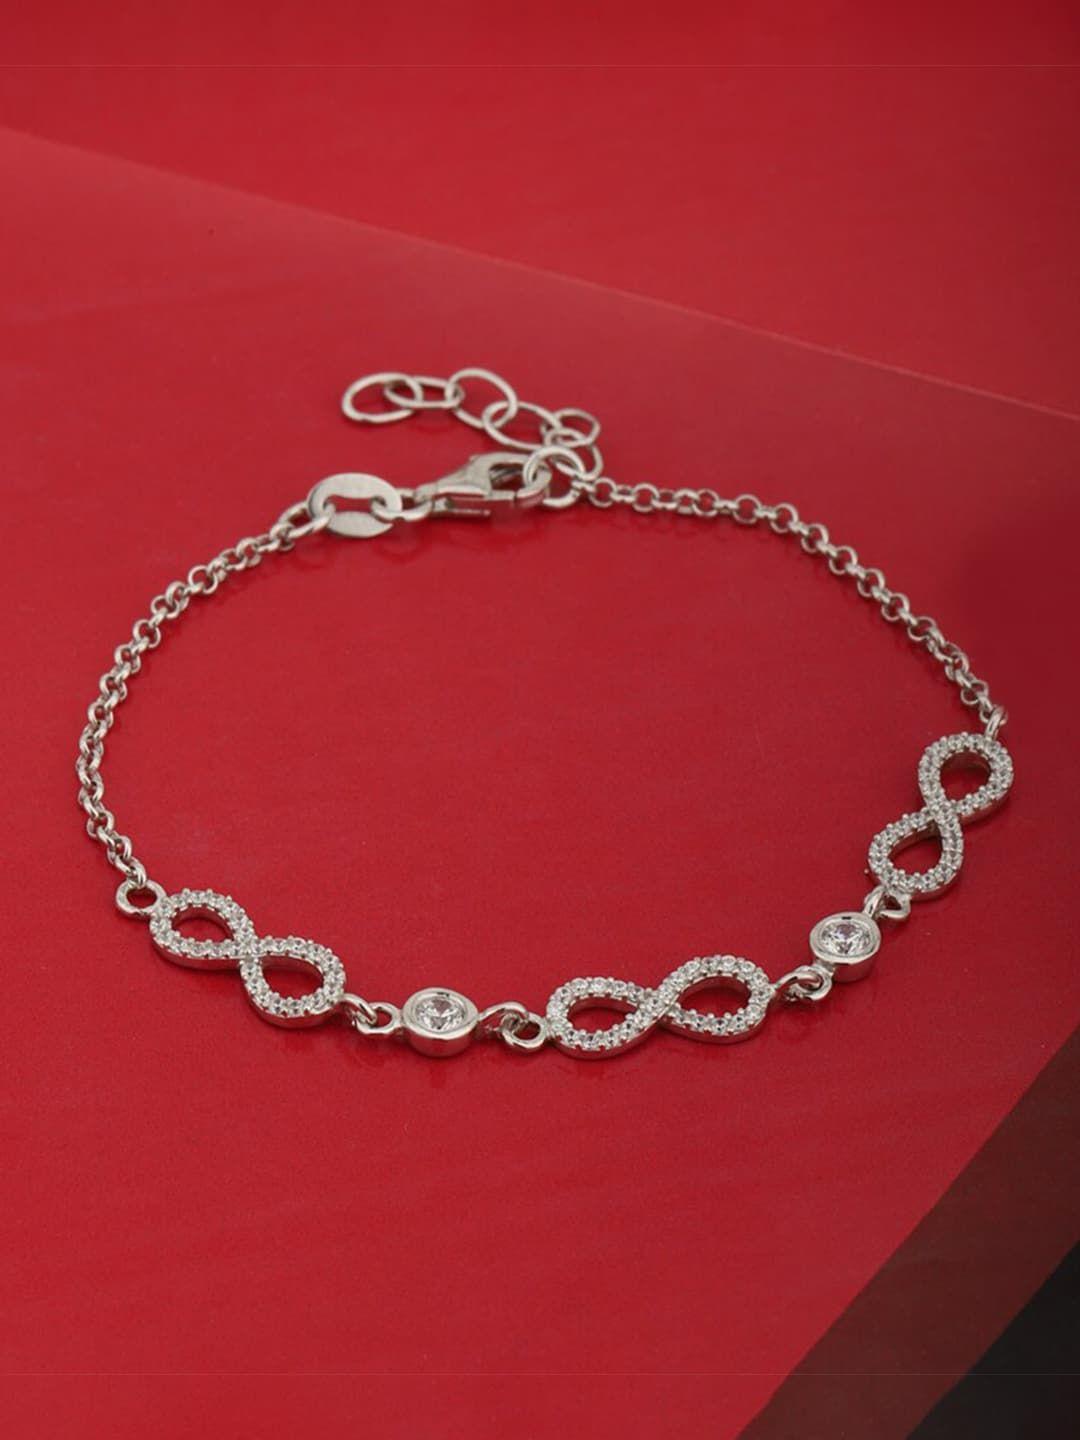 vanbelle 925 sterling silver cubic zirconia handcrafted rhodium-plated link bracelet